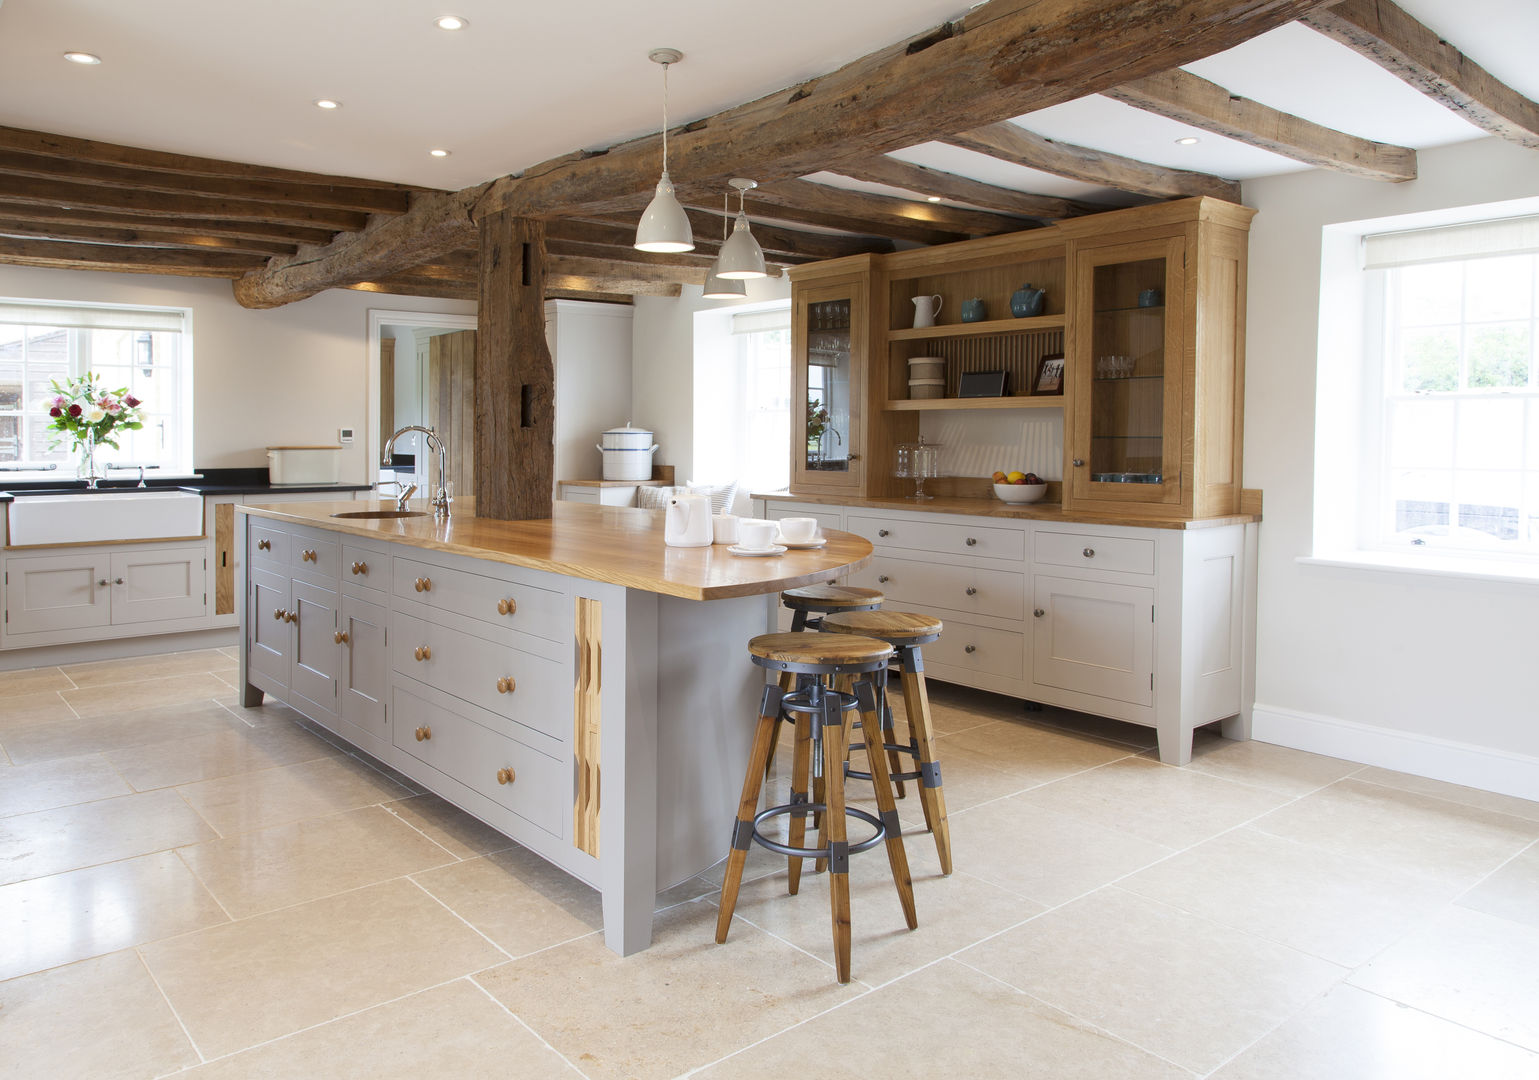 Old English - Bespoke kitchen project in Cambridgeshire Baker & Baker Cocinas de estilo rústico dresser,kitchen island,seating,tile flooring,beams,lighting